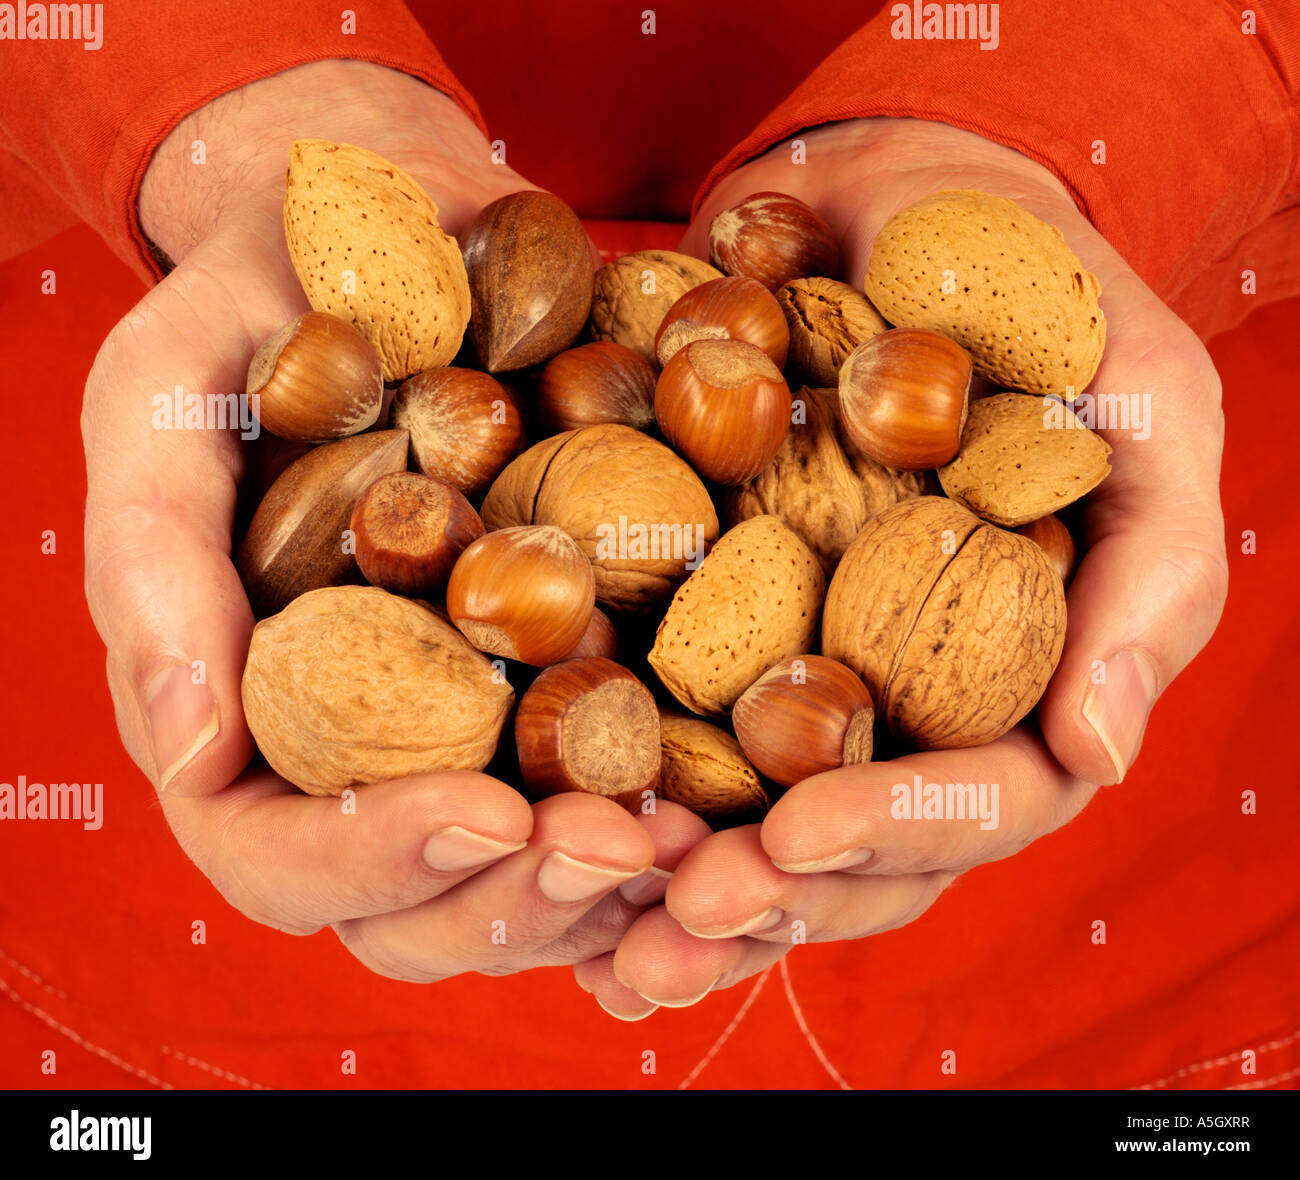 MAN HOLDING MIXED NUTS Stock Photo